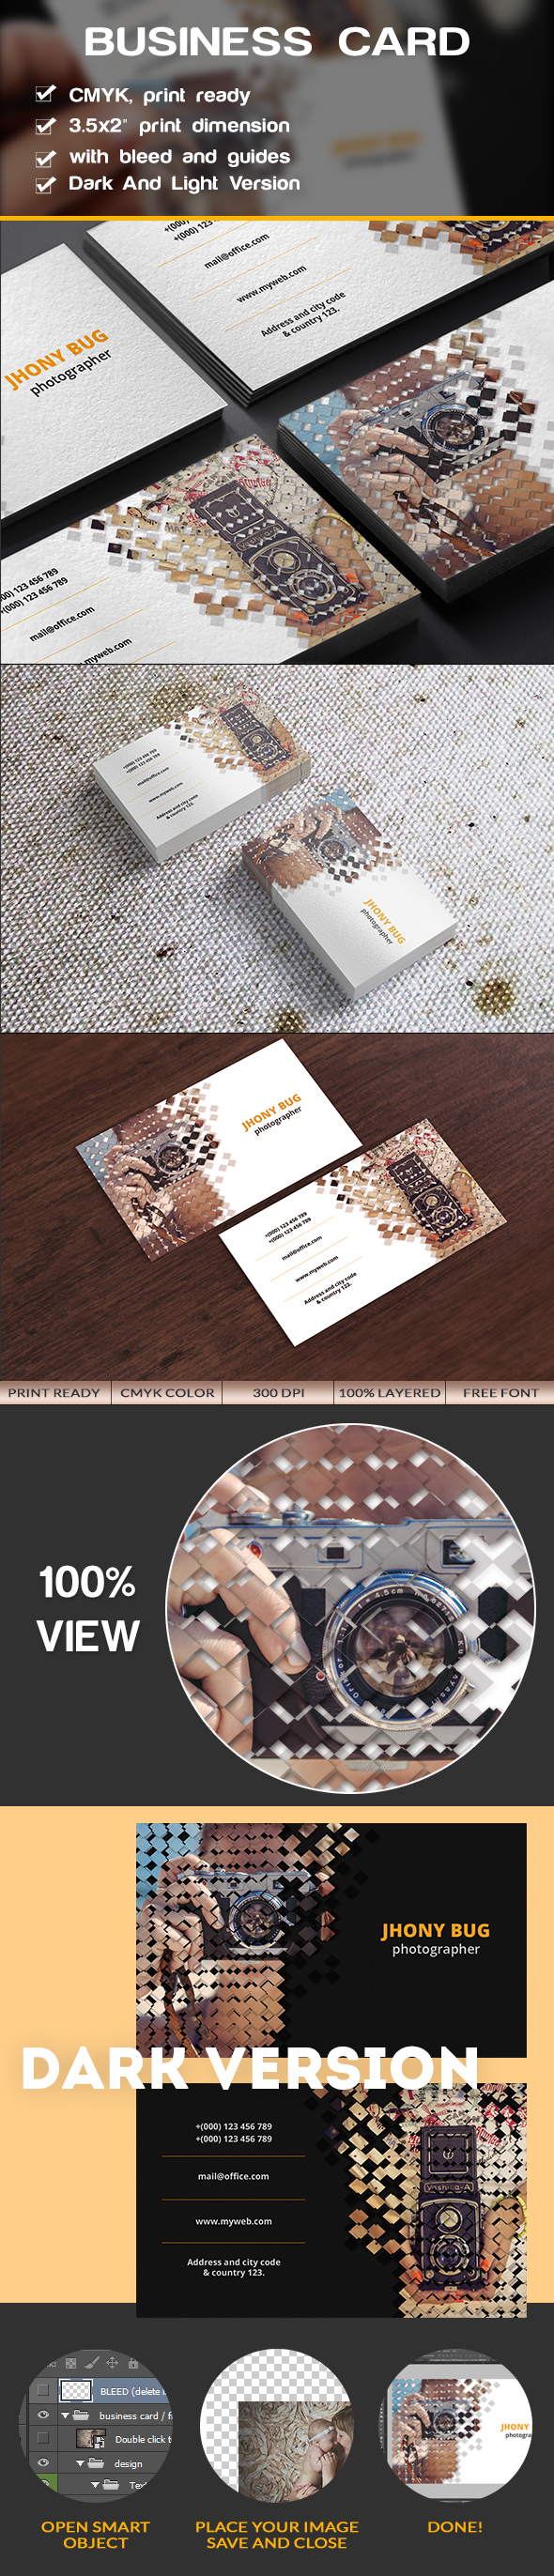 business card creative photographer corporate